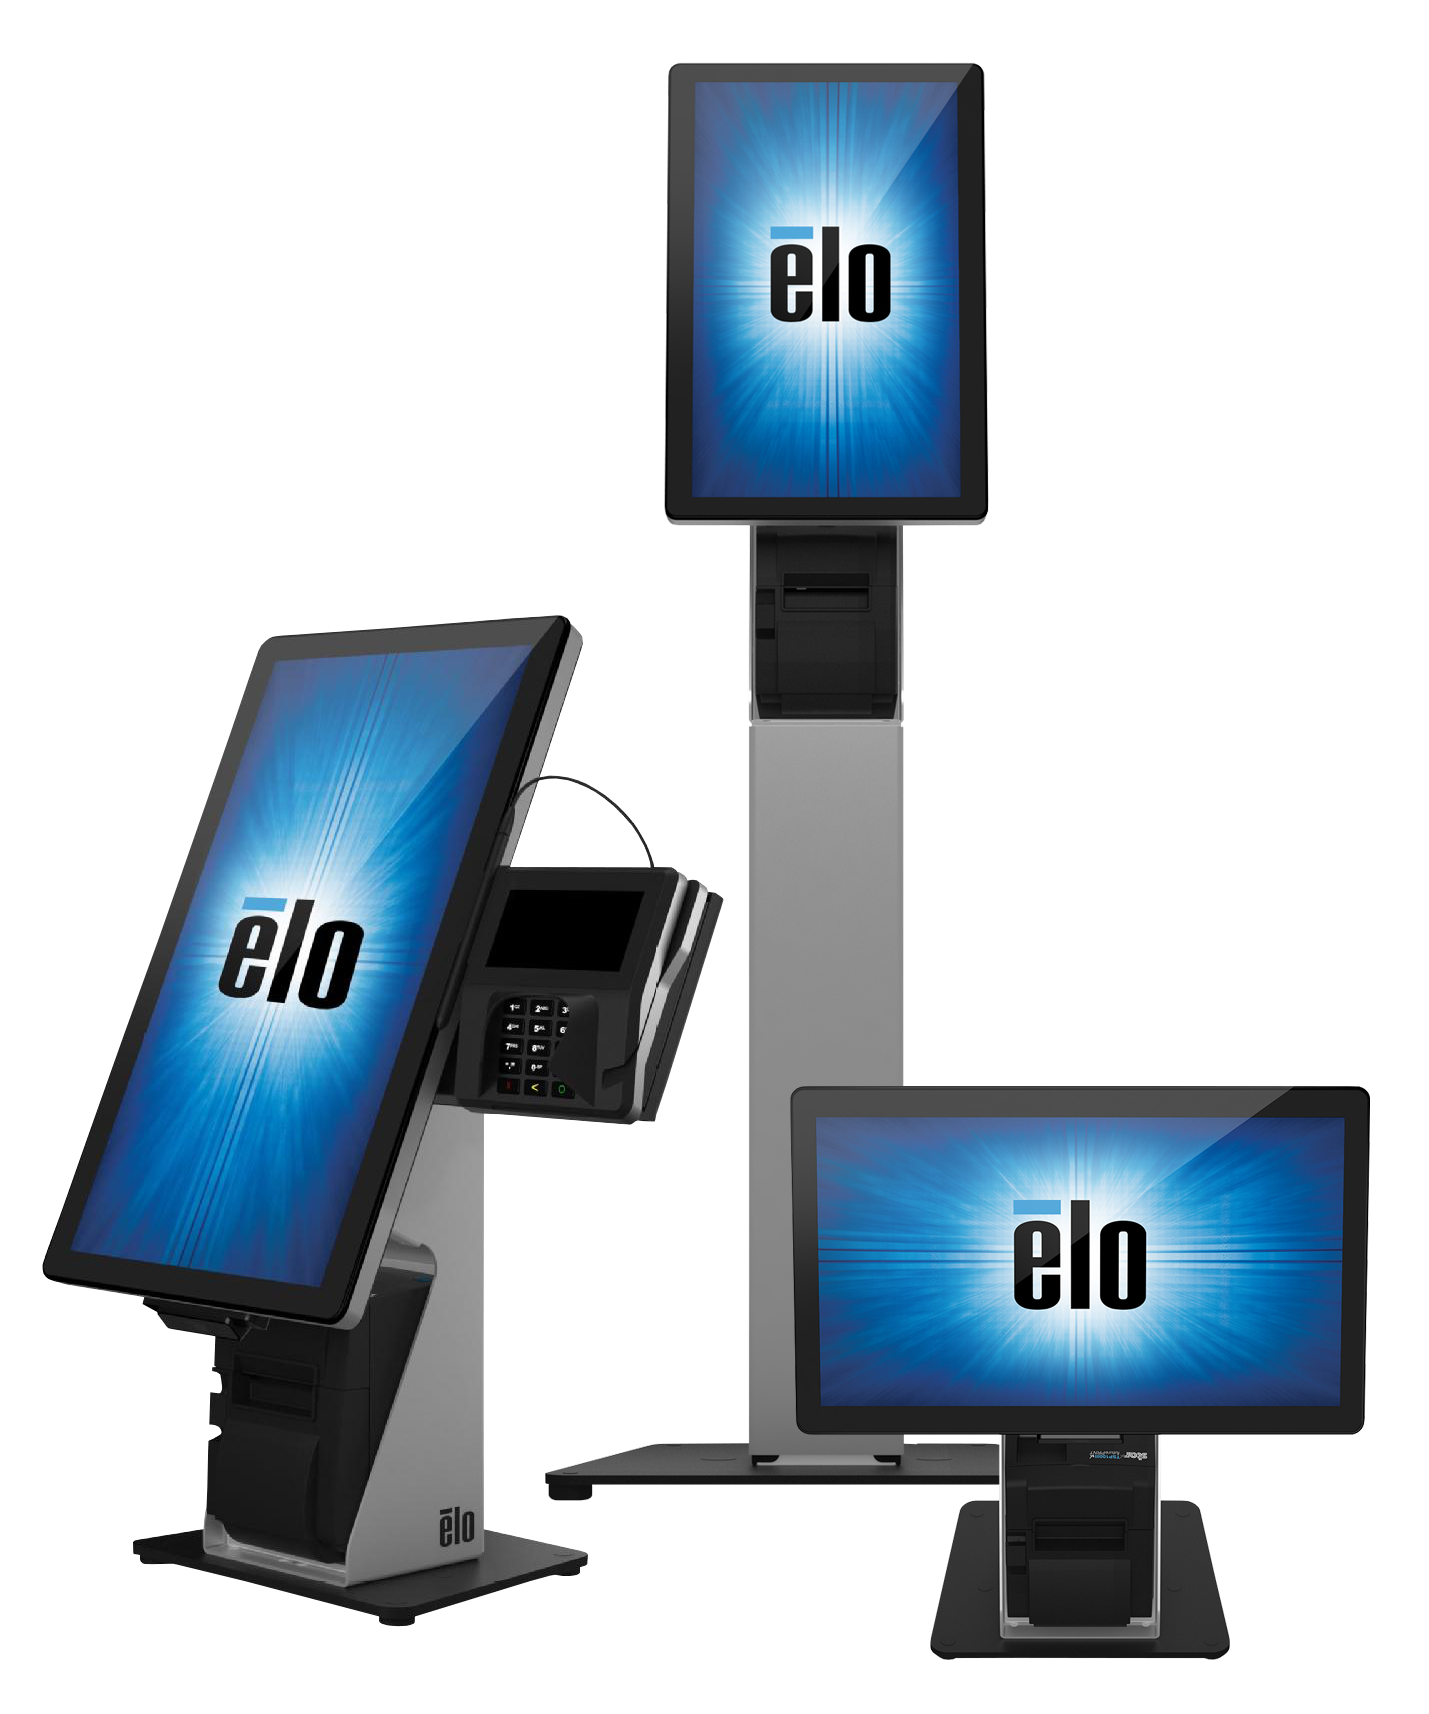 Elo Self Service Kiosk Image